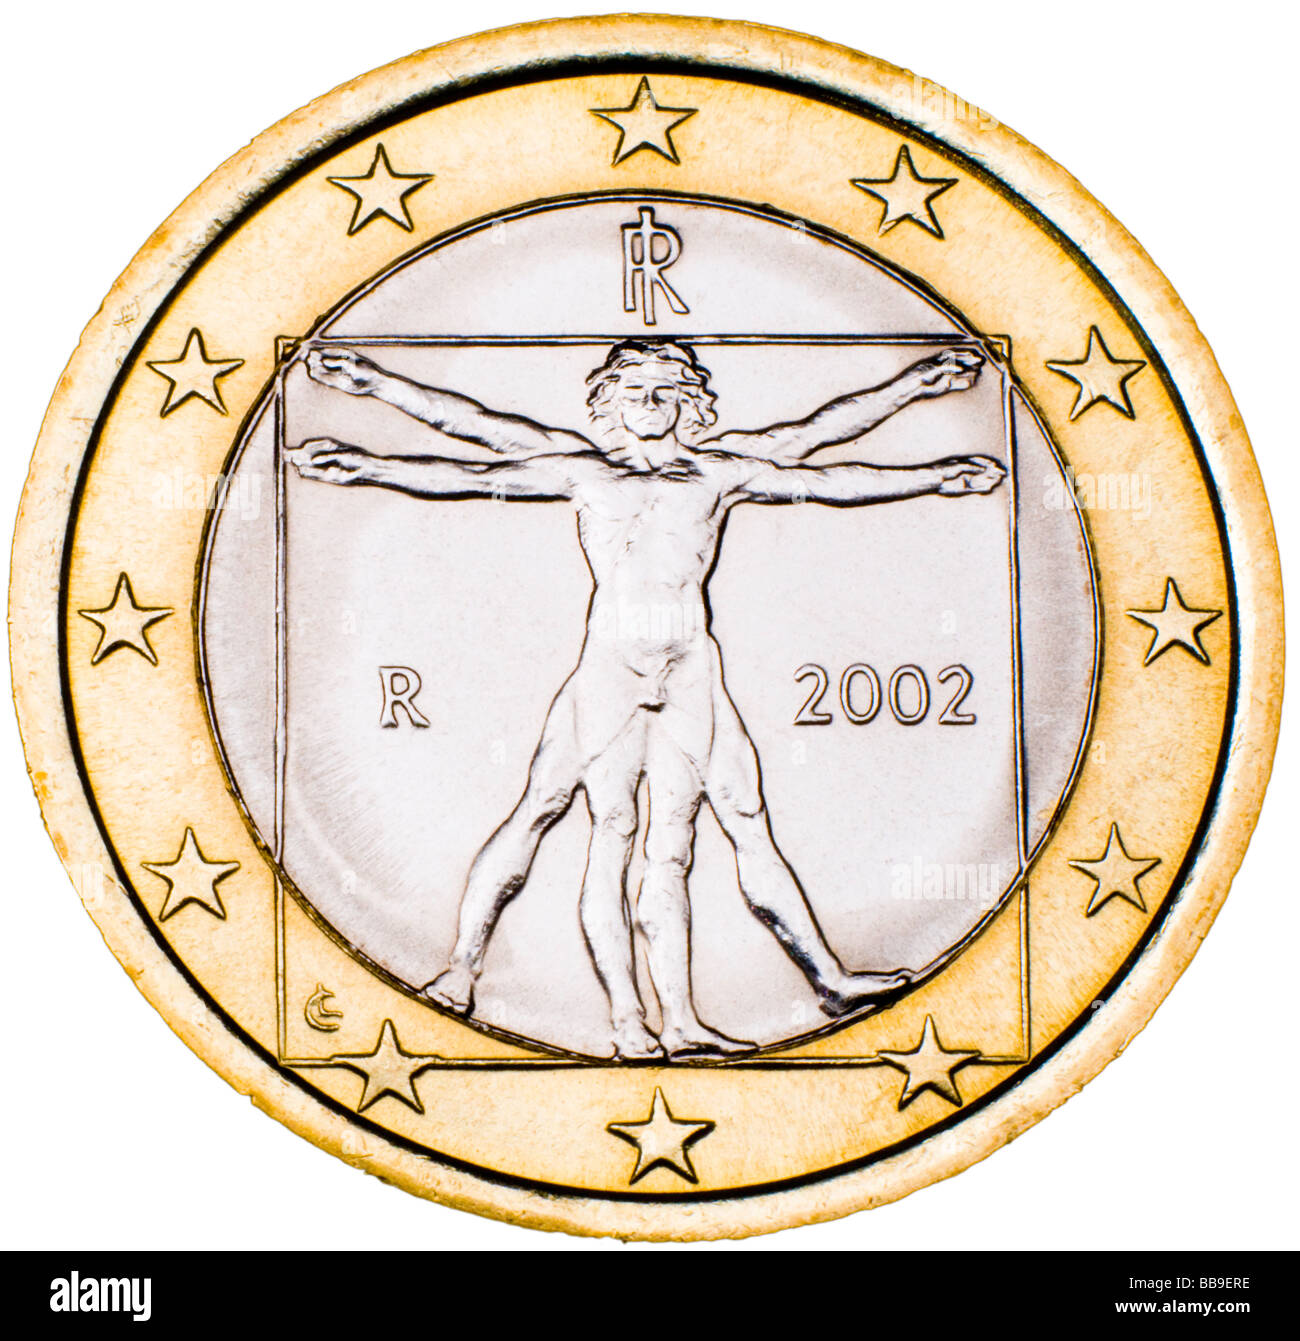 Italienischen 1-Euro-Münze Rückseite Stockfotografie - Alamy